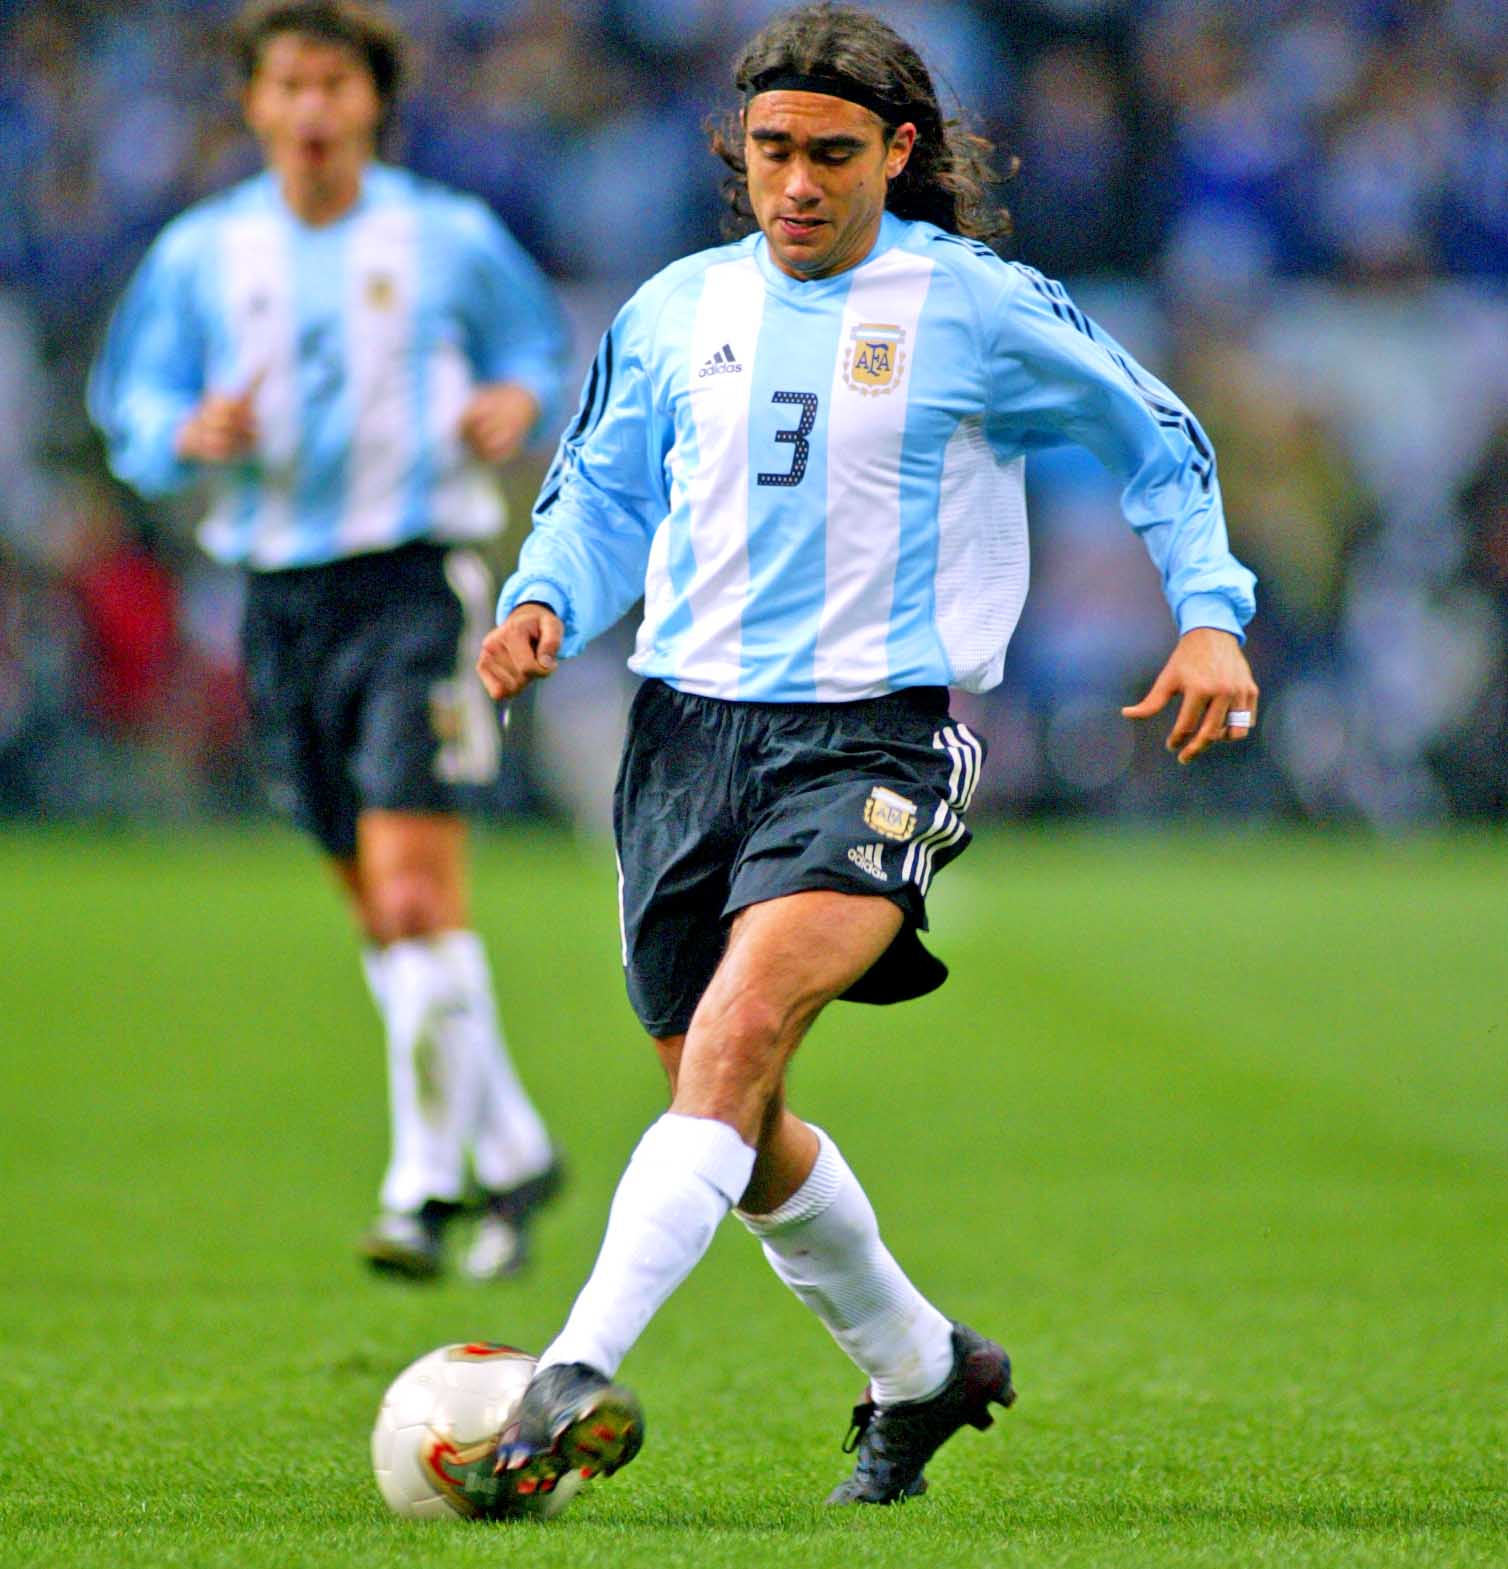 Juan Pablo Sorin's authentic Argentina jersey